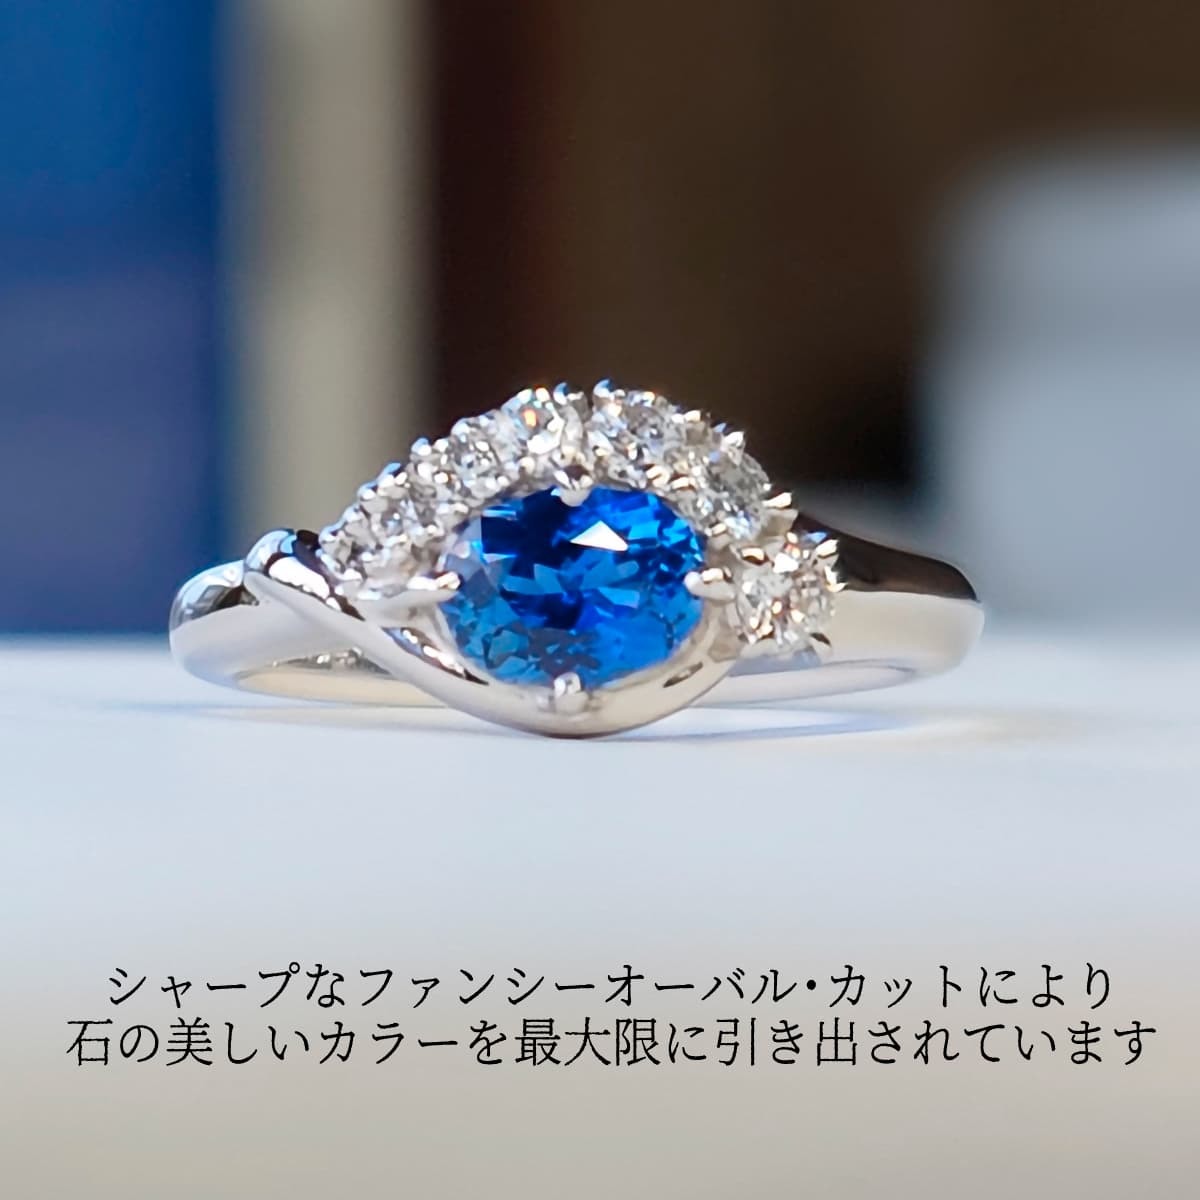  сапфир кукуруза цветок голубой кольцо бриллиант кольцо платина PT900 натуральный 